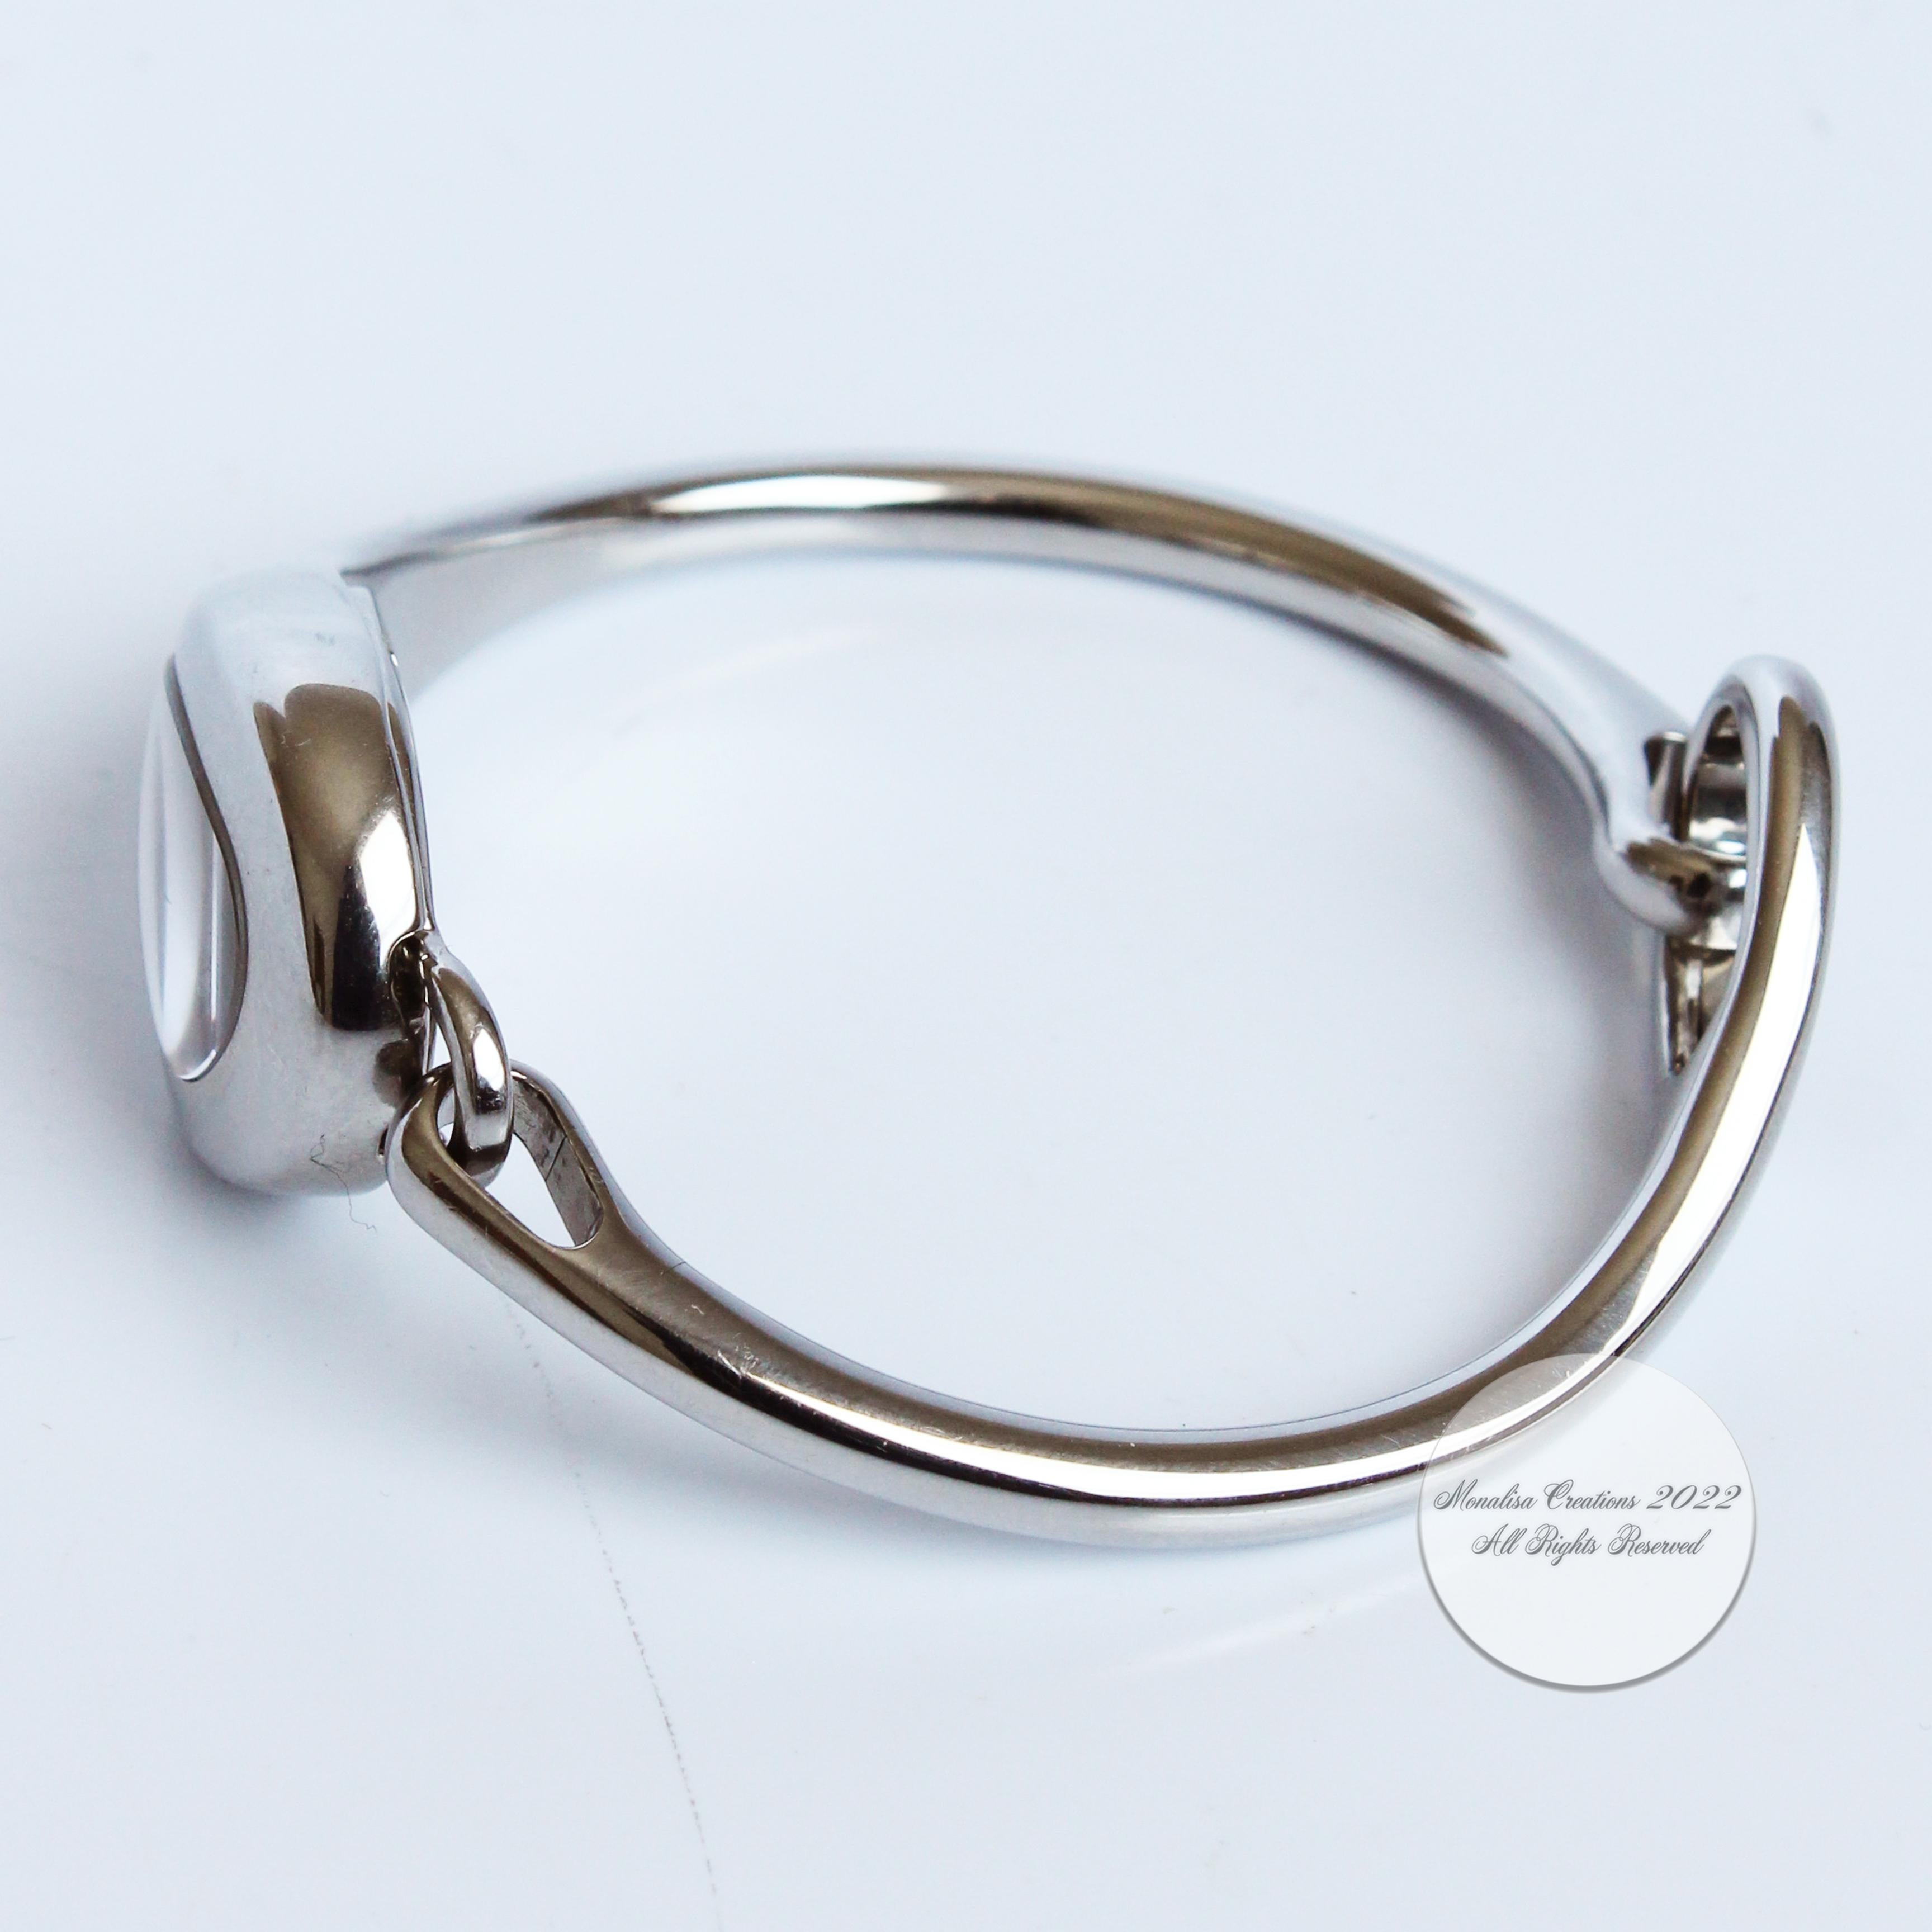 Gucci Watch Silver Metal Horsebit #103 Ladies Wrist Watch Modernist Abstract  2